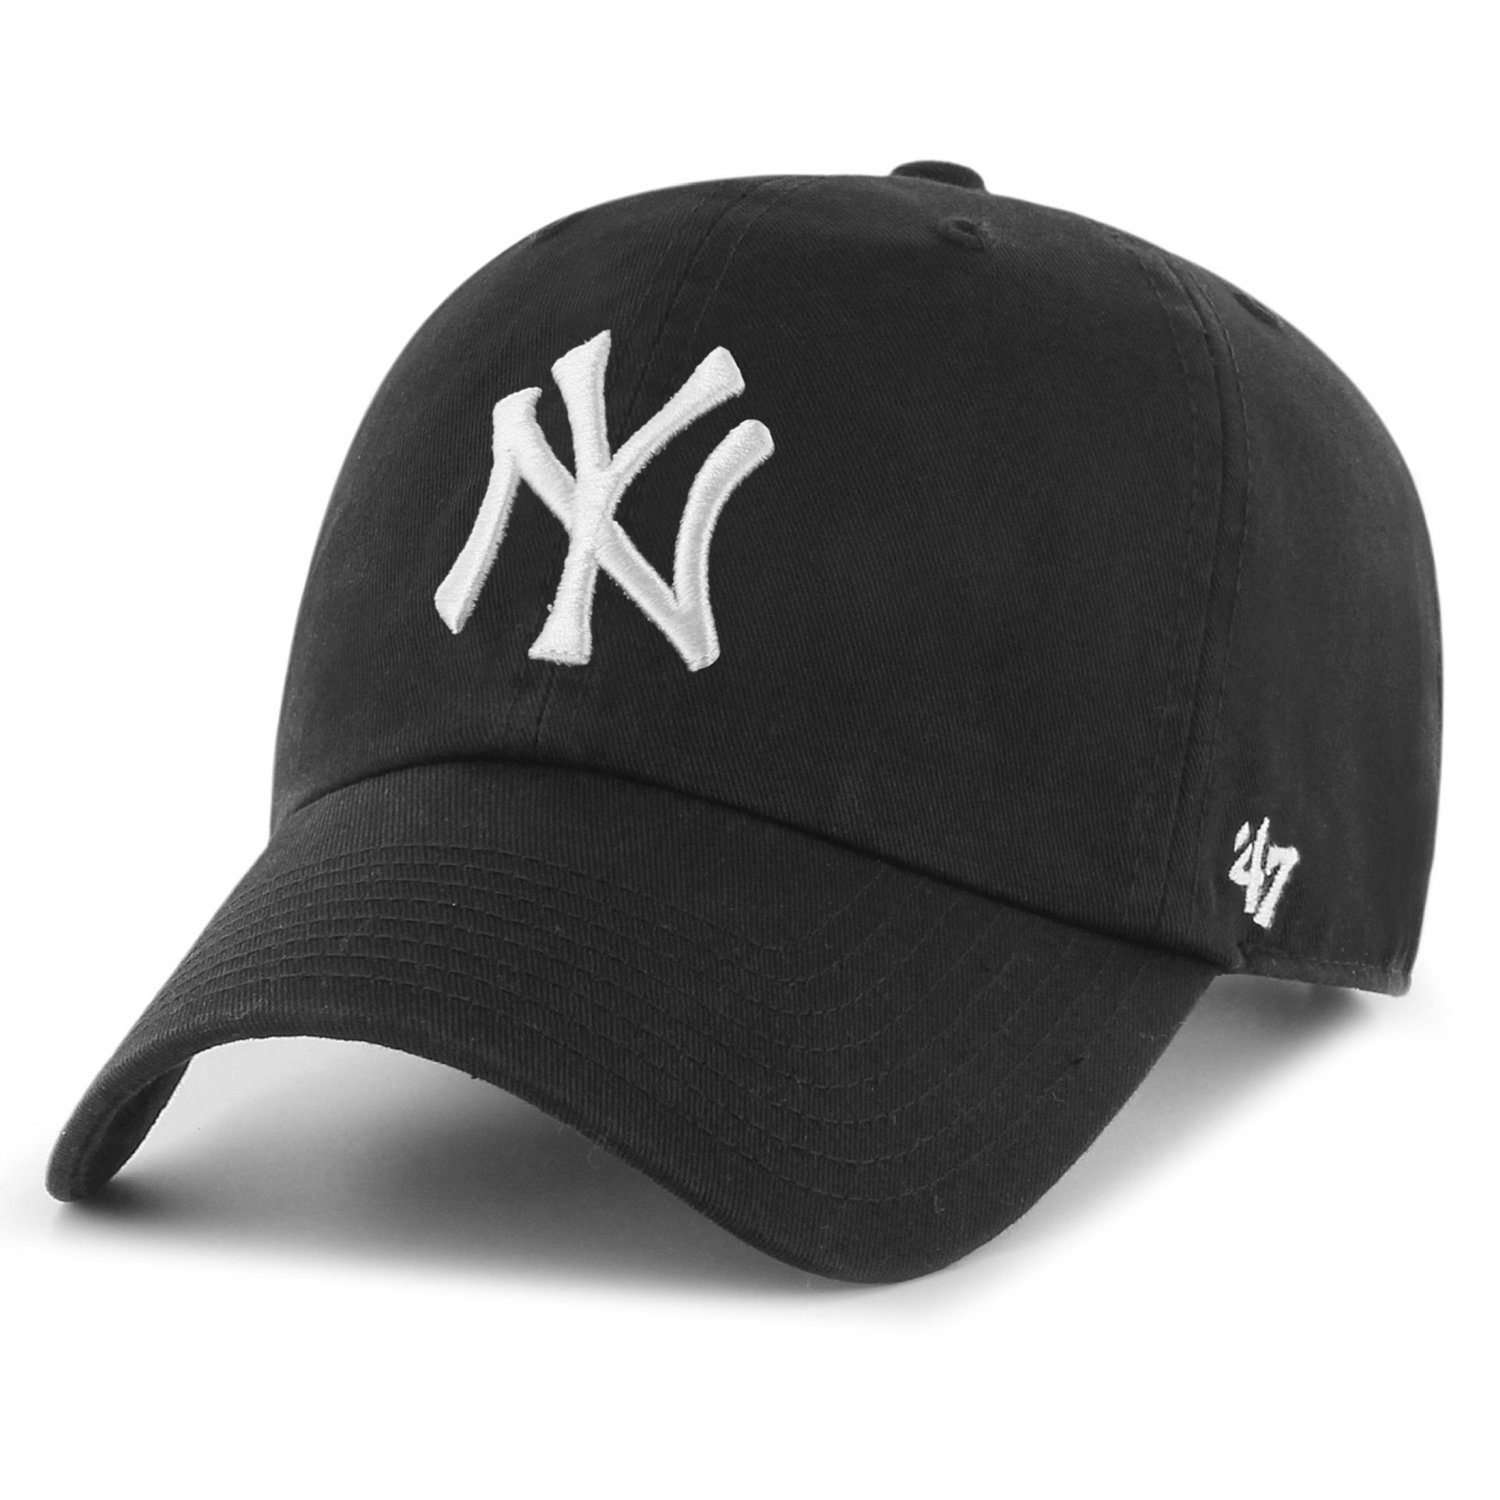 York Brand MLB '47 Yankees New Relaxed Cap Fit Trucker